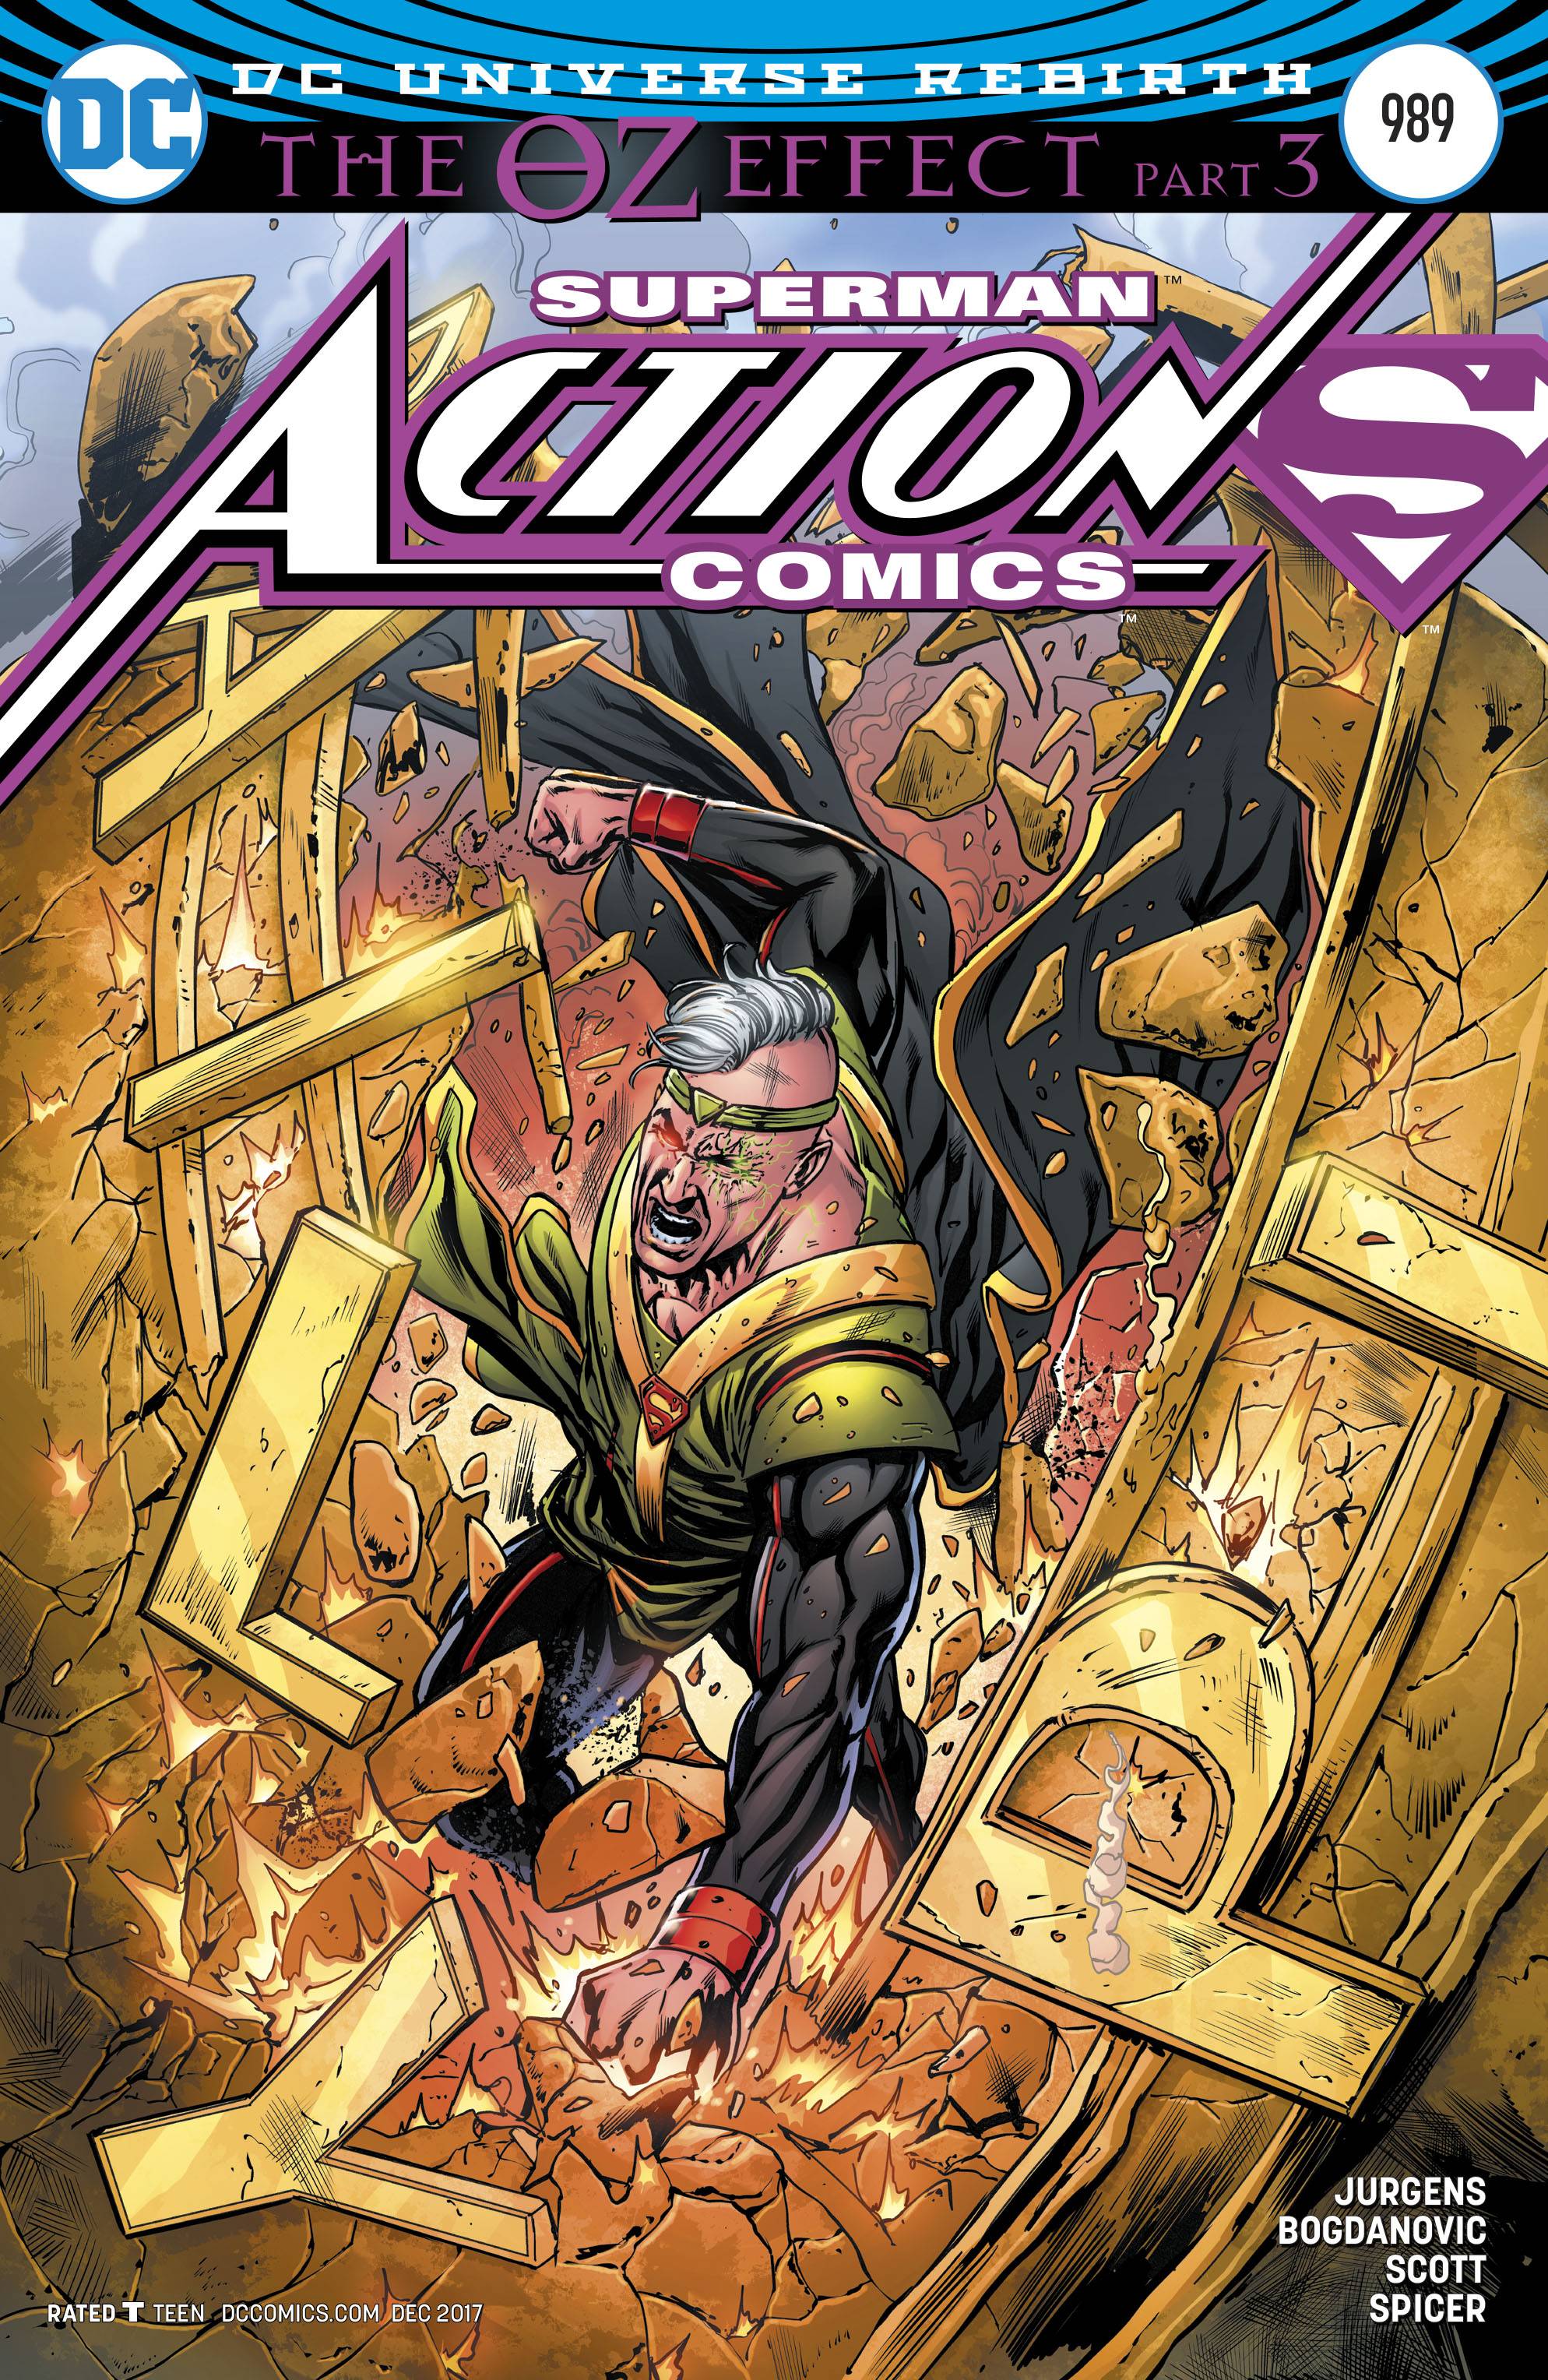 Action Comics #989 Variant Edition (Oz Effect) (1938)